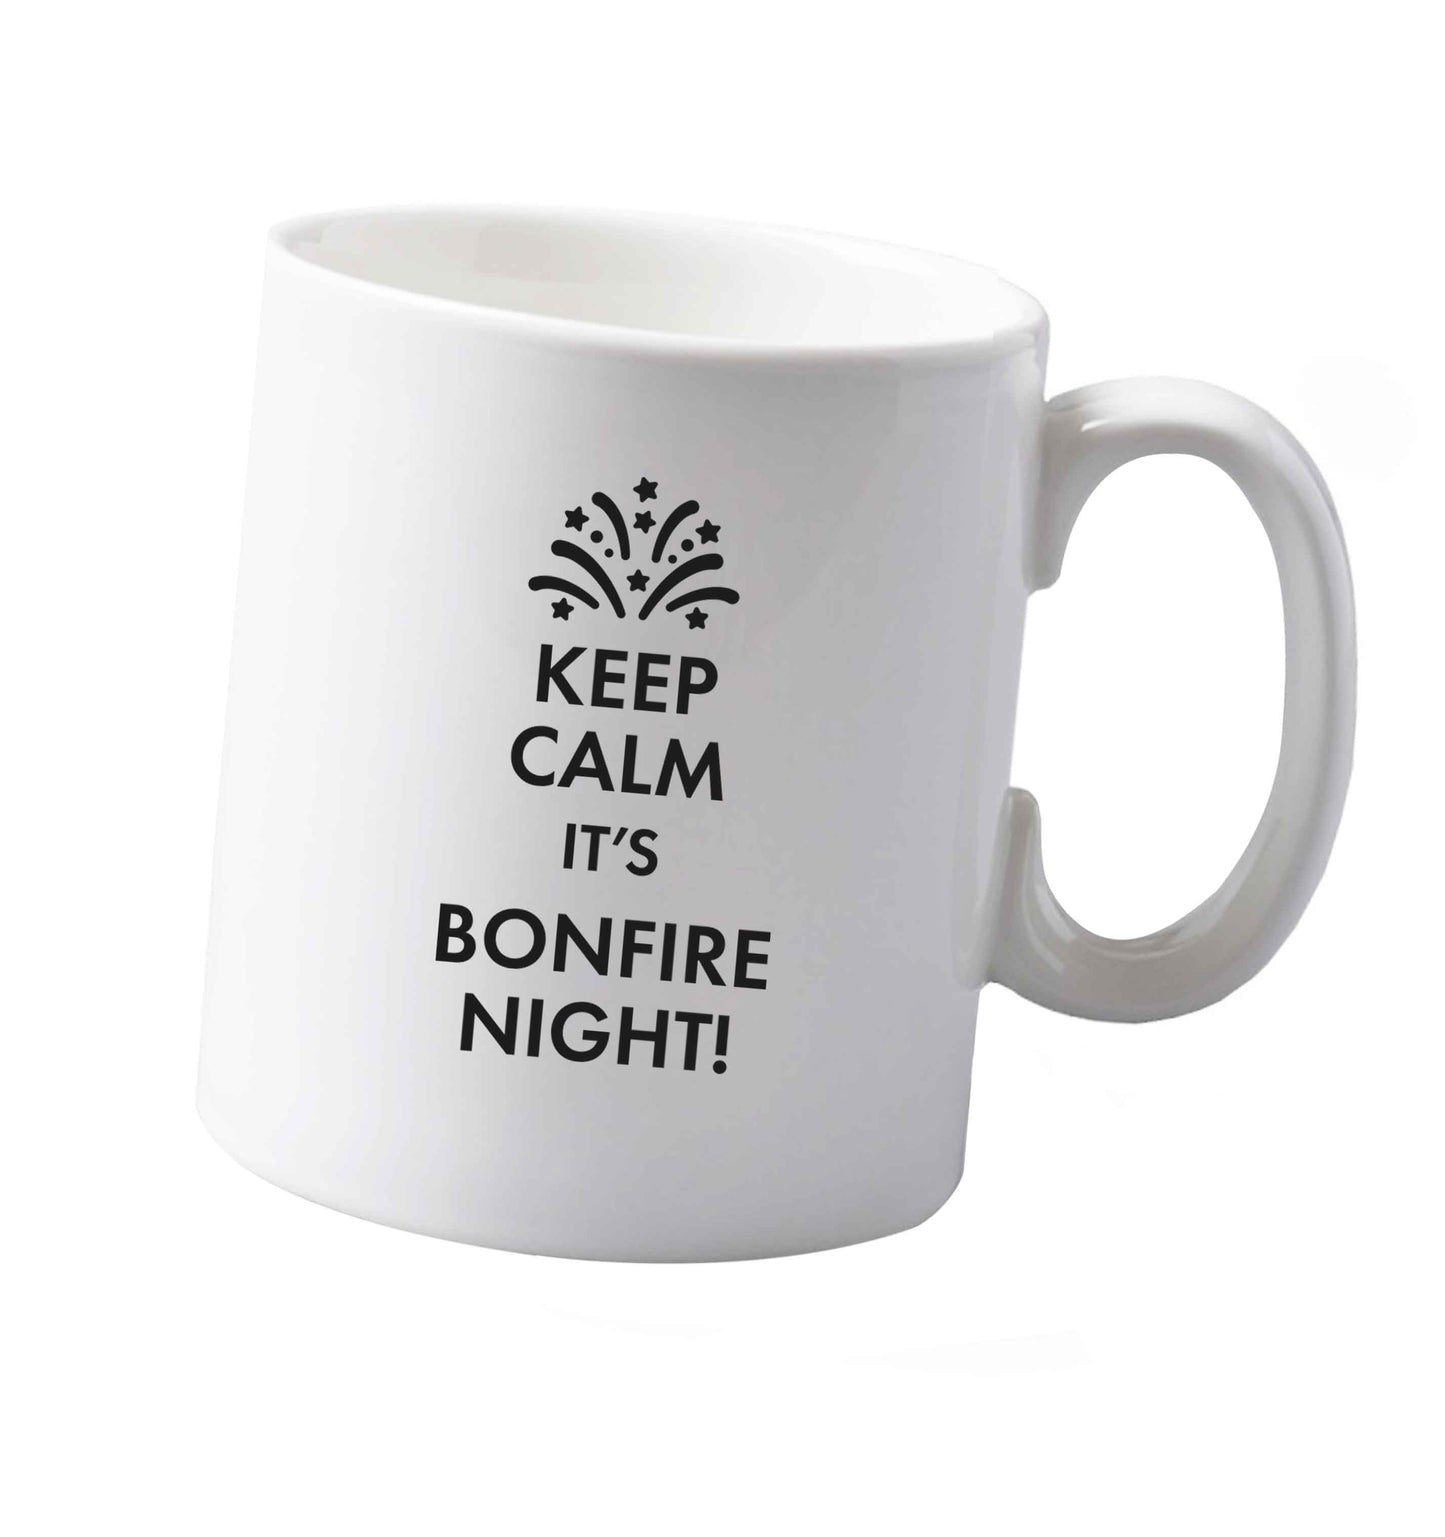 10 oz Keep calm its bonfire night ceramic mug both sides